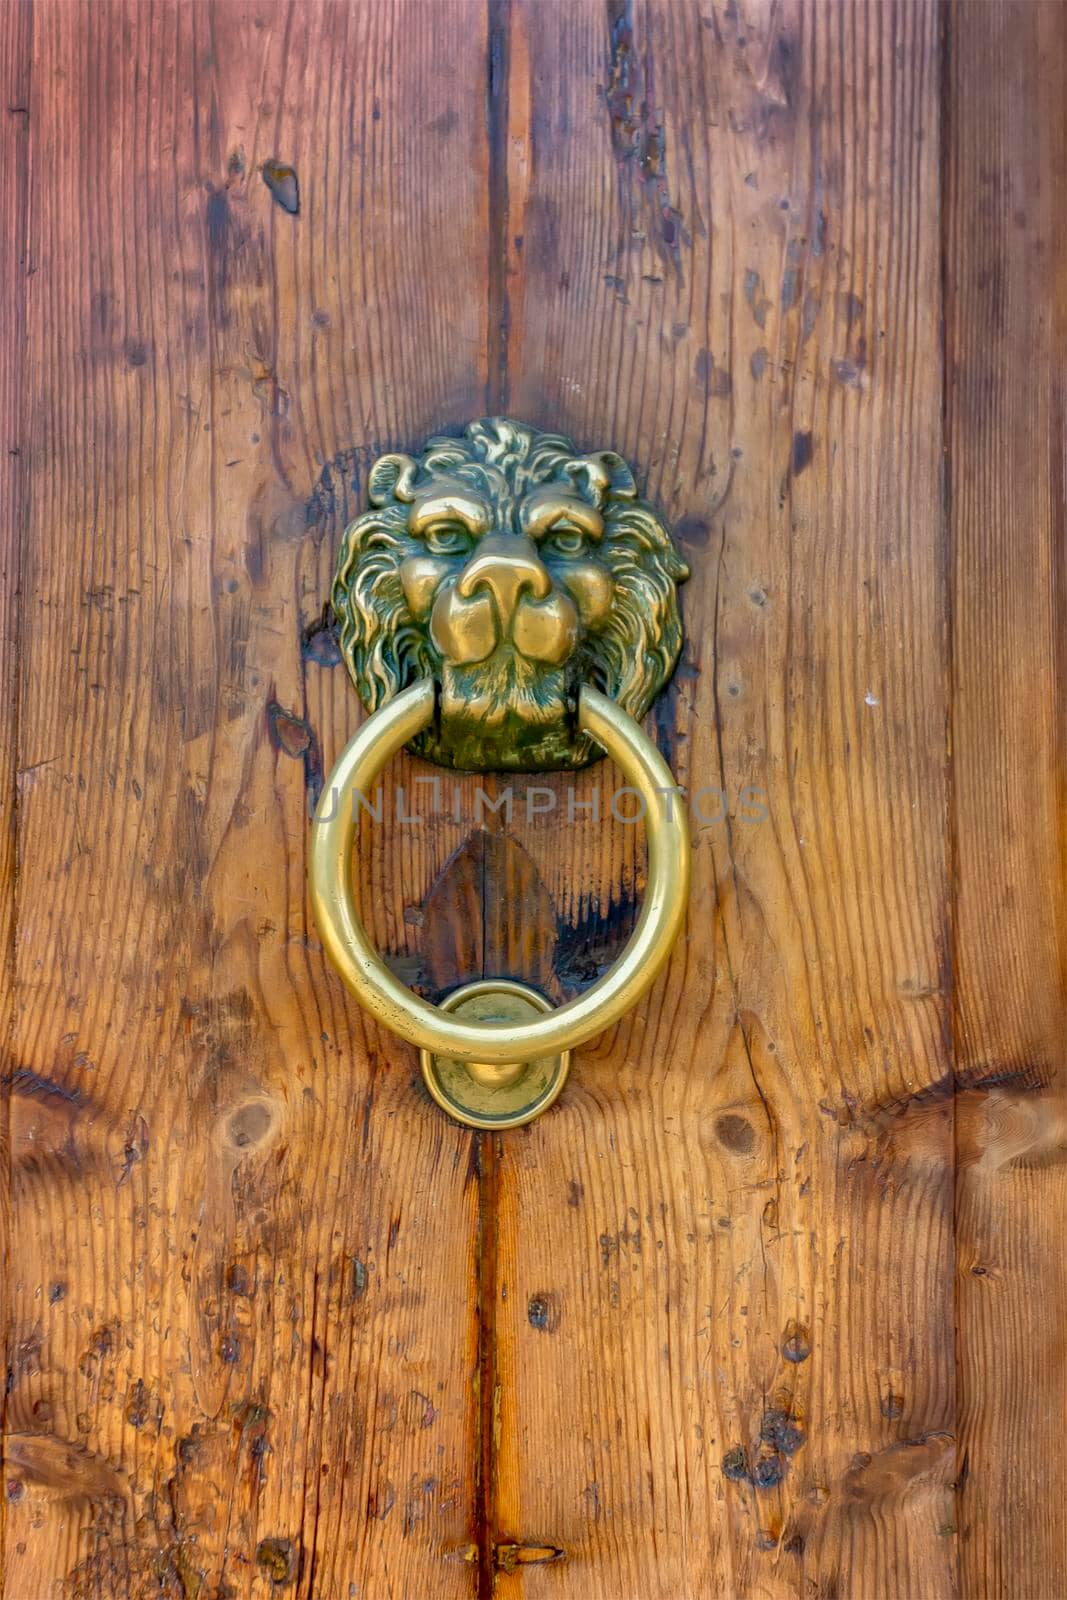 Door knocker. Old antique brass knocker on the wooden doors for knocking. Close up